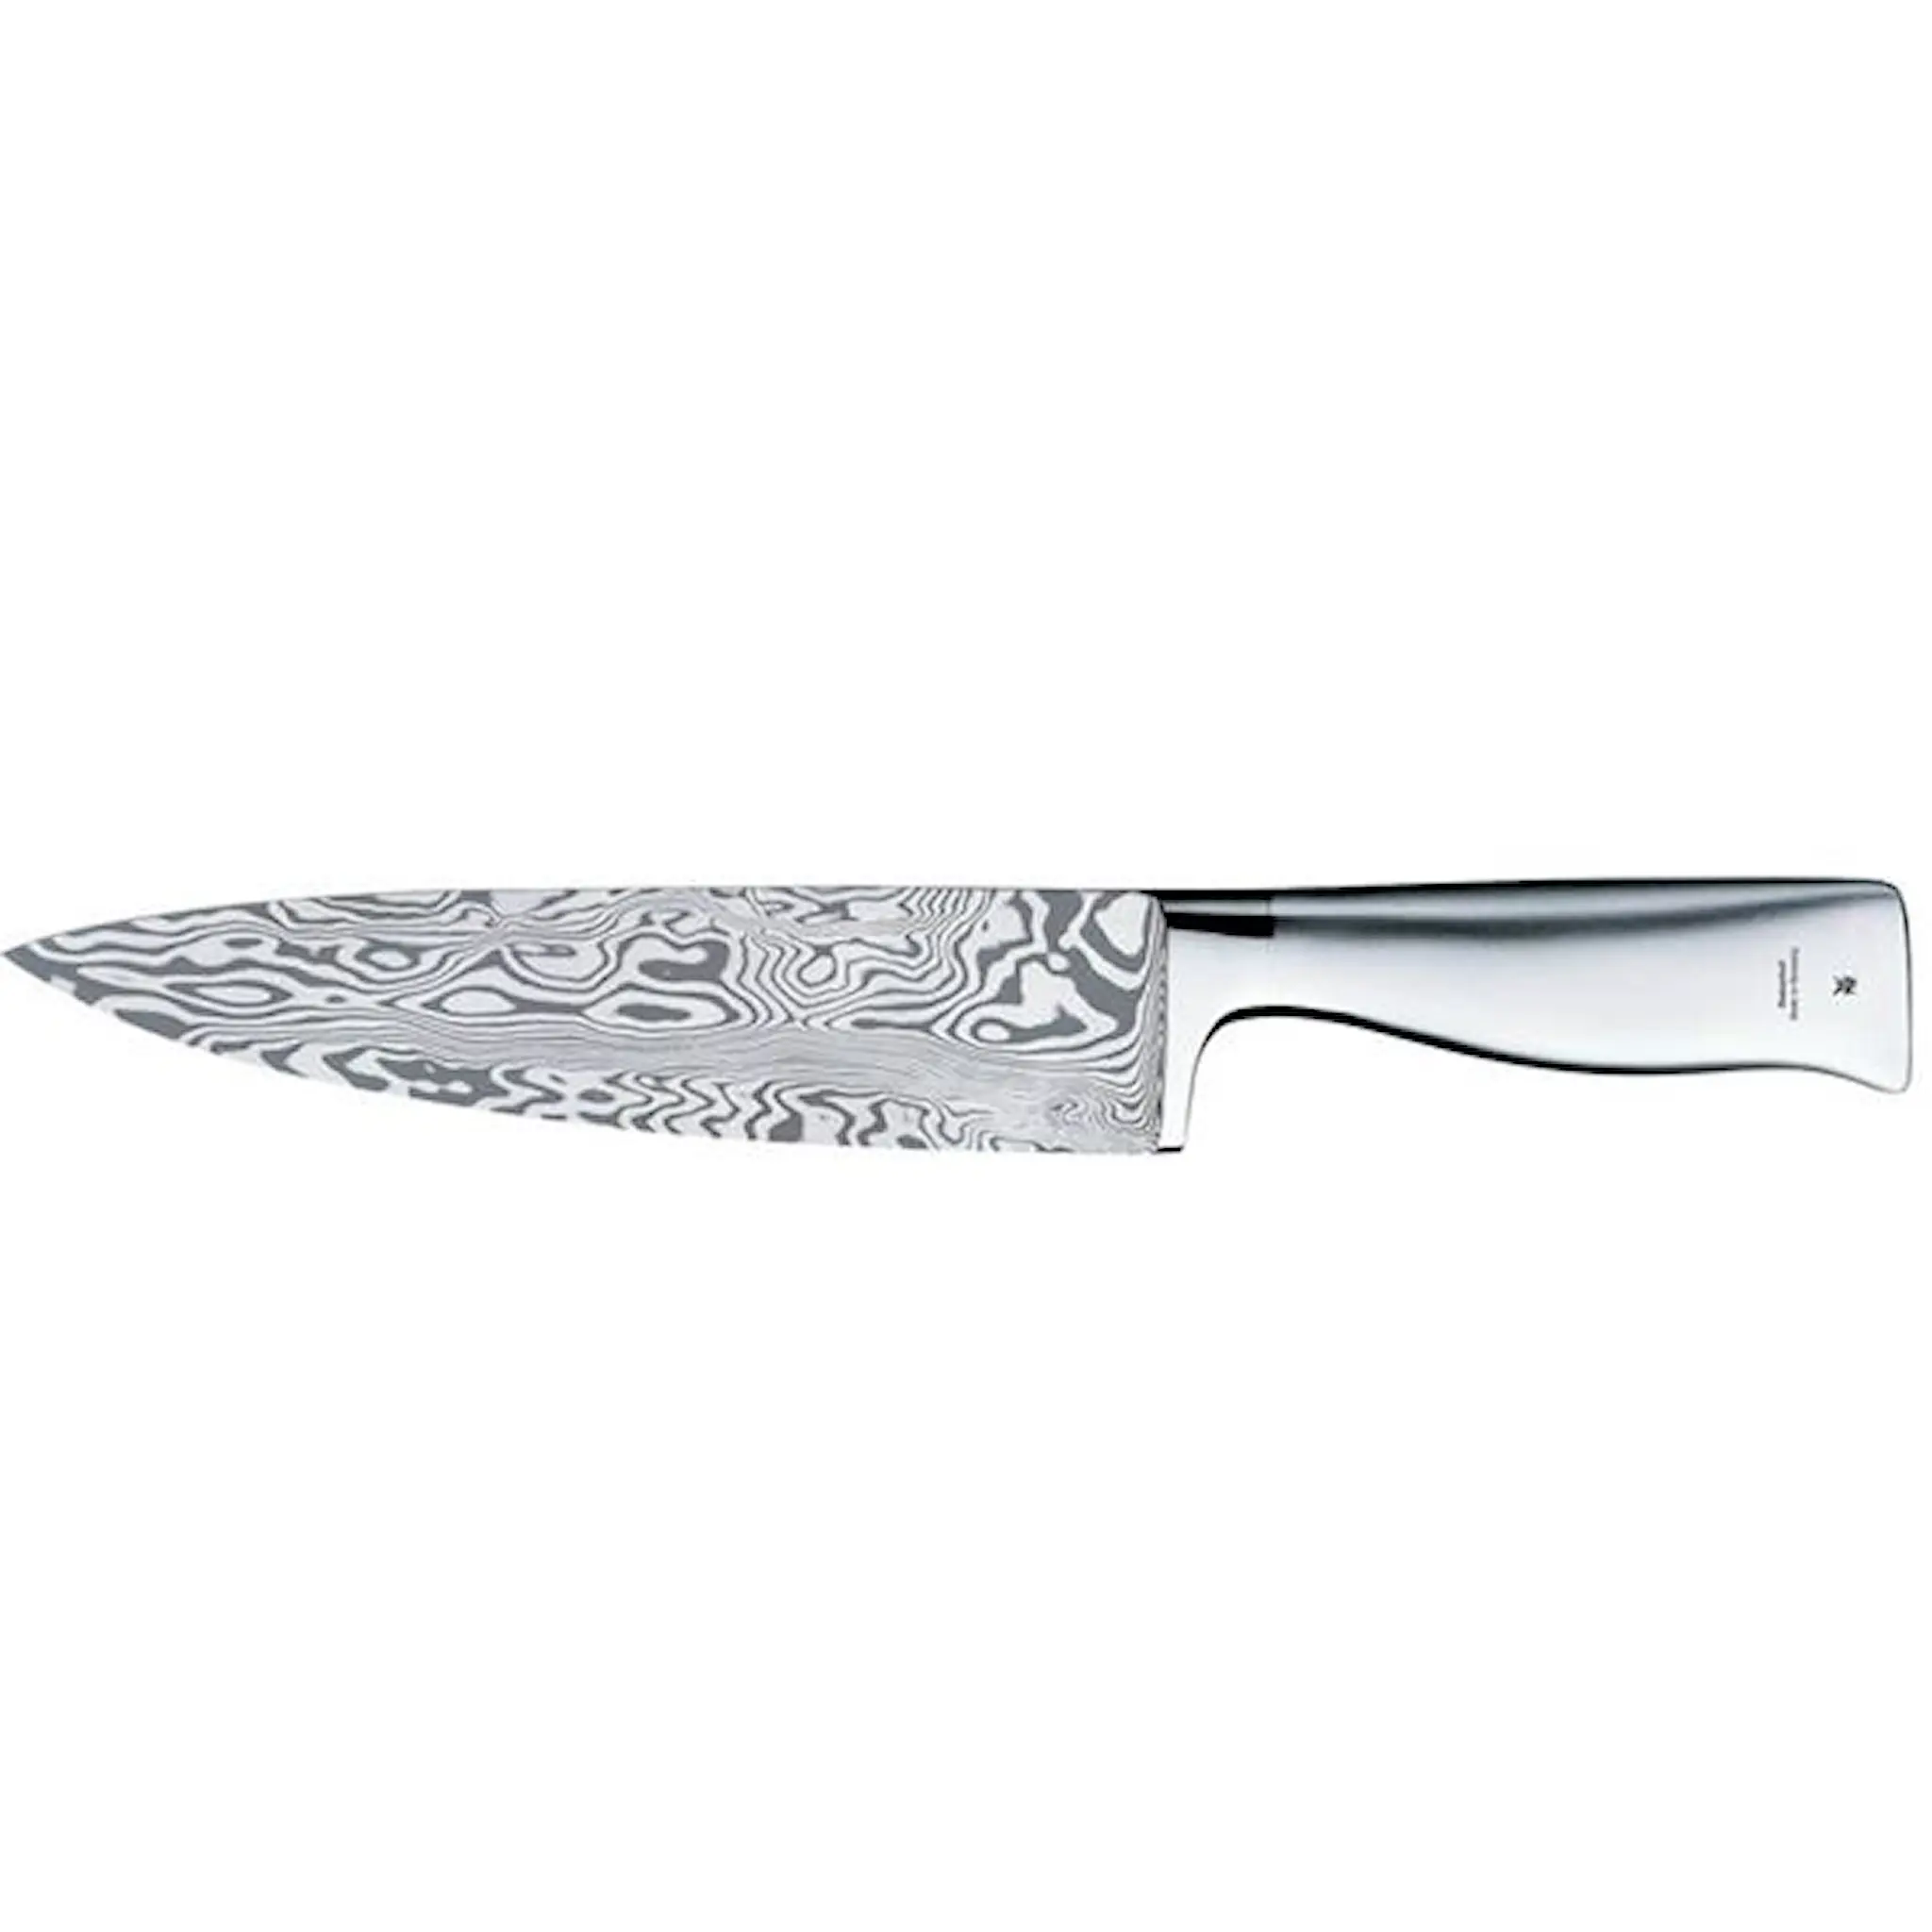 WMF Grand Gourmet kockkniv 33,5 cm